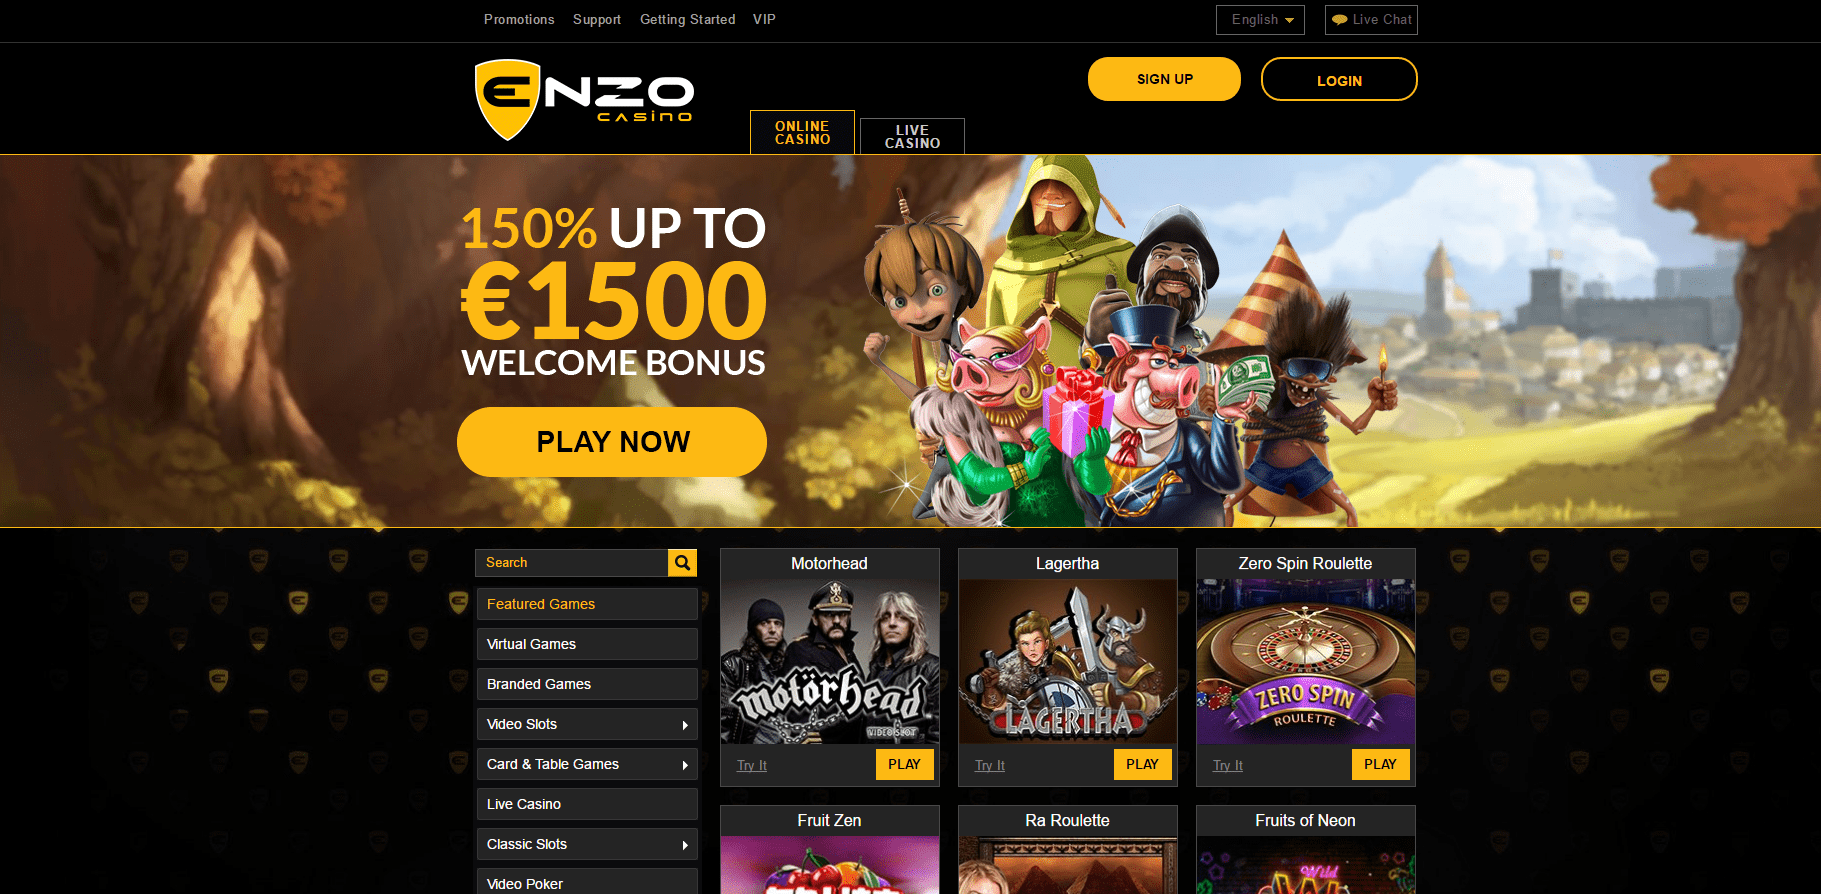 Enzo casino no deposit bonus codes 2017 bonus